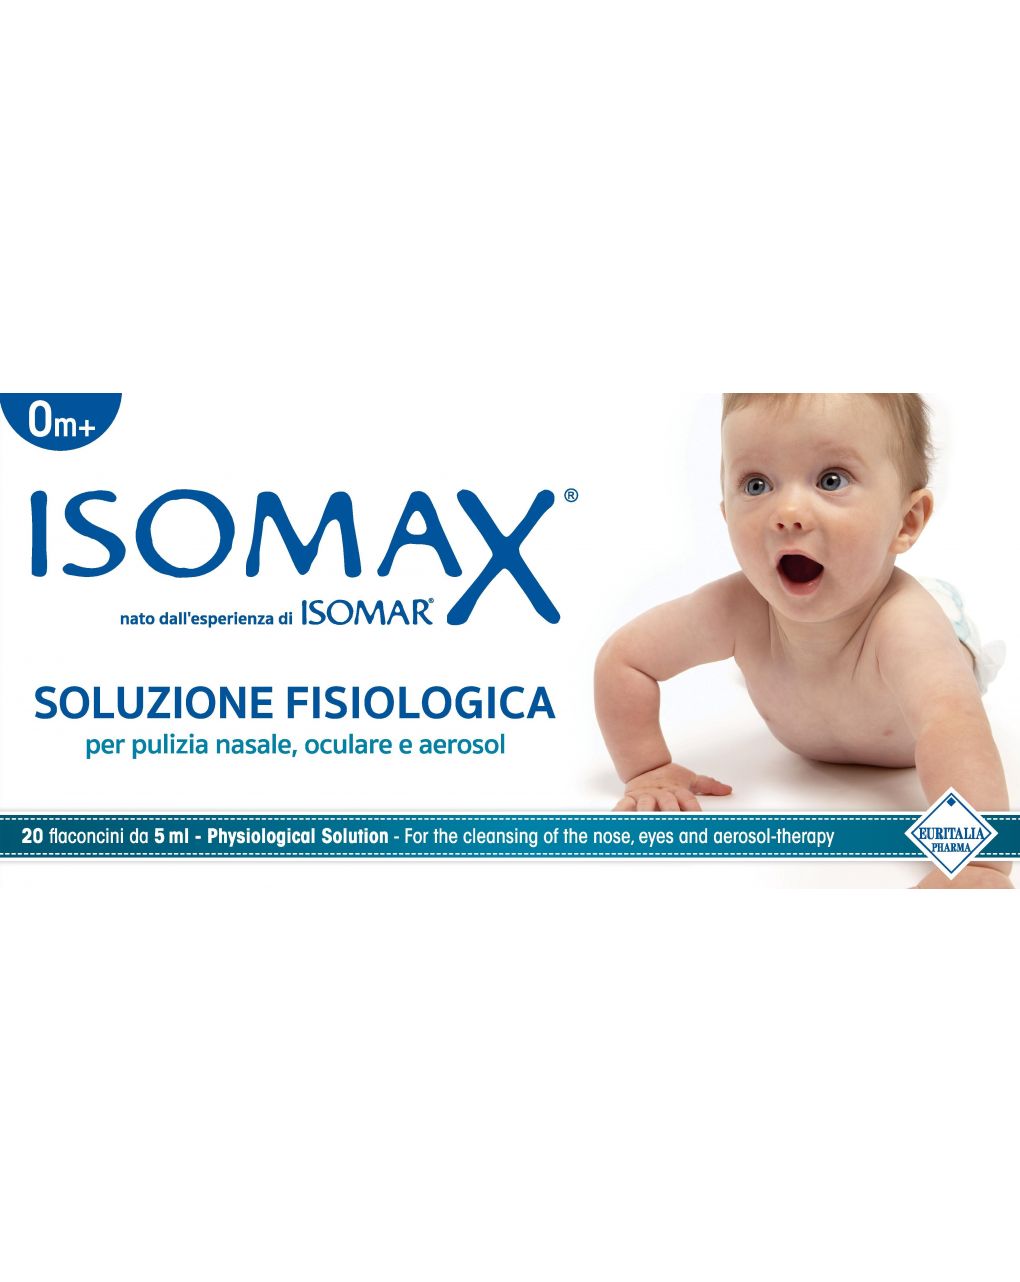 Isomax fisiologica 20 fl x 5ml